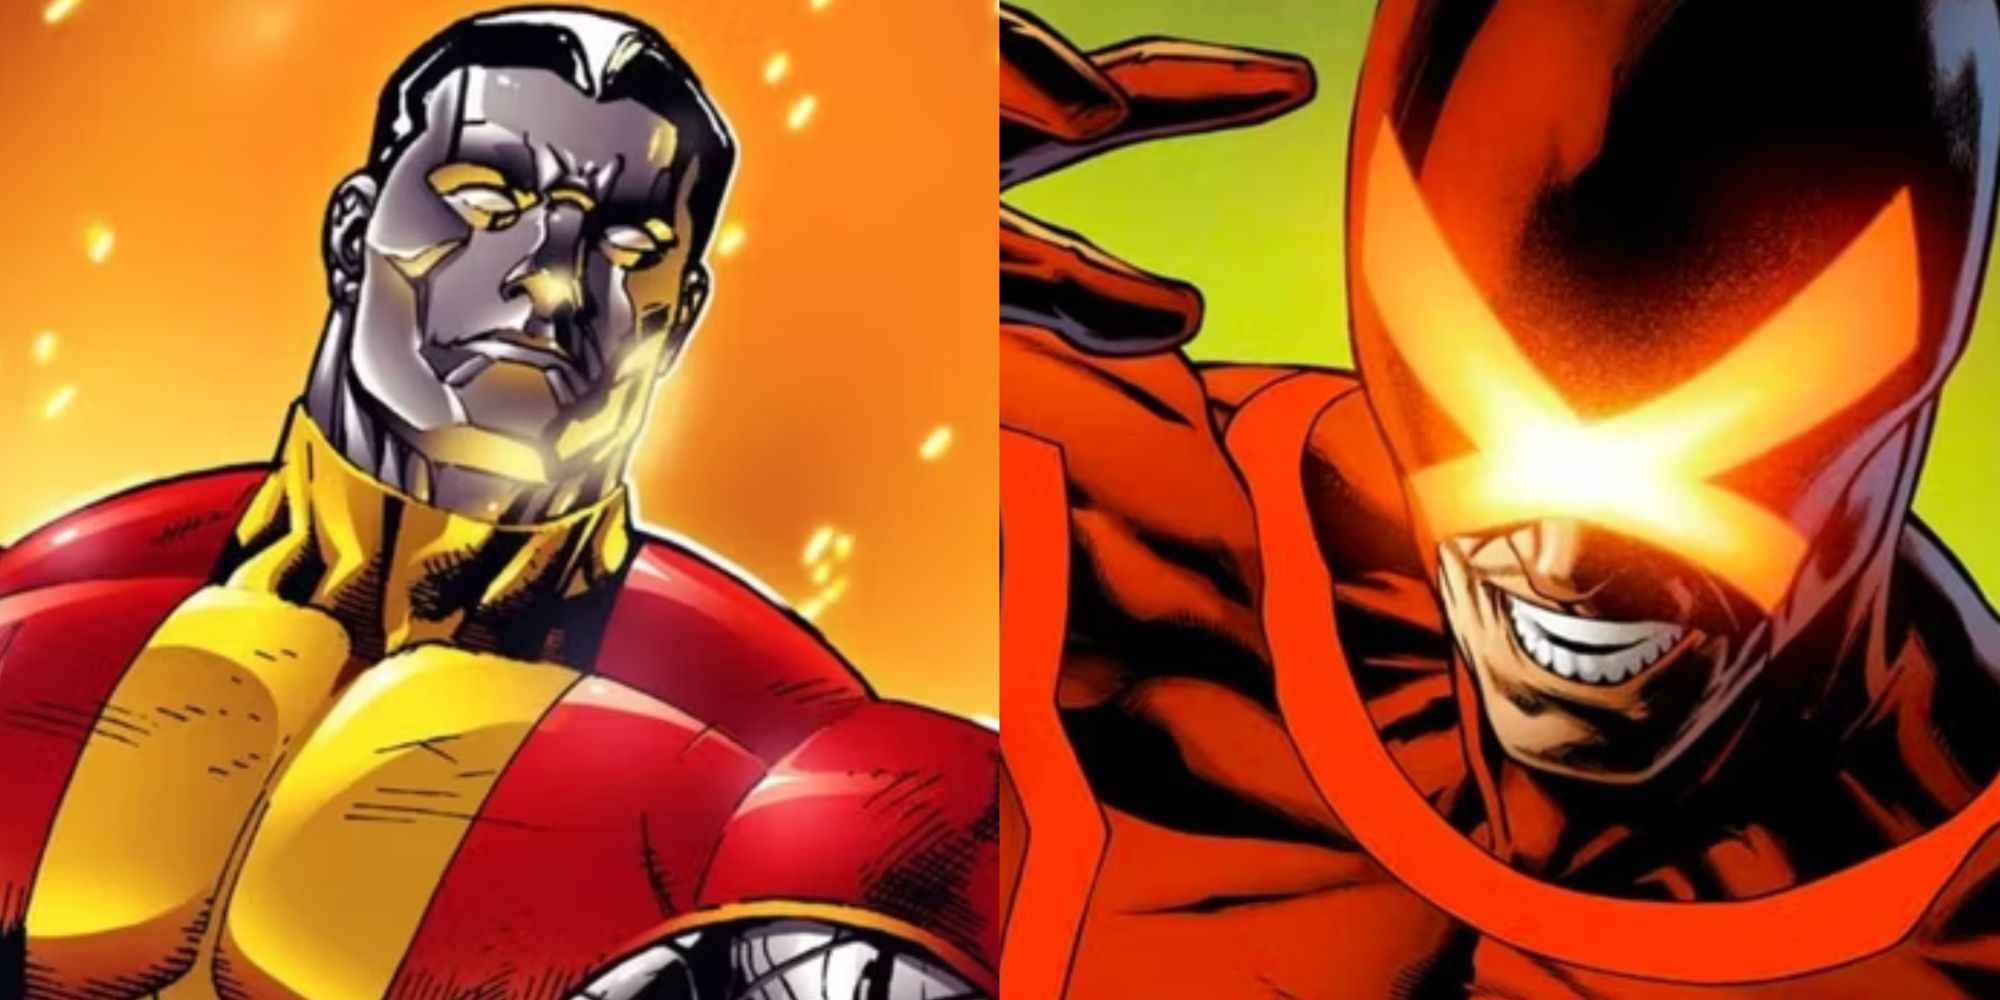 A split image of X-Men Colossus & Cyclops in Marvel Comics